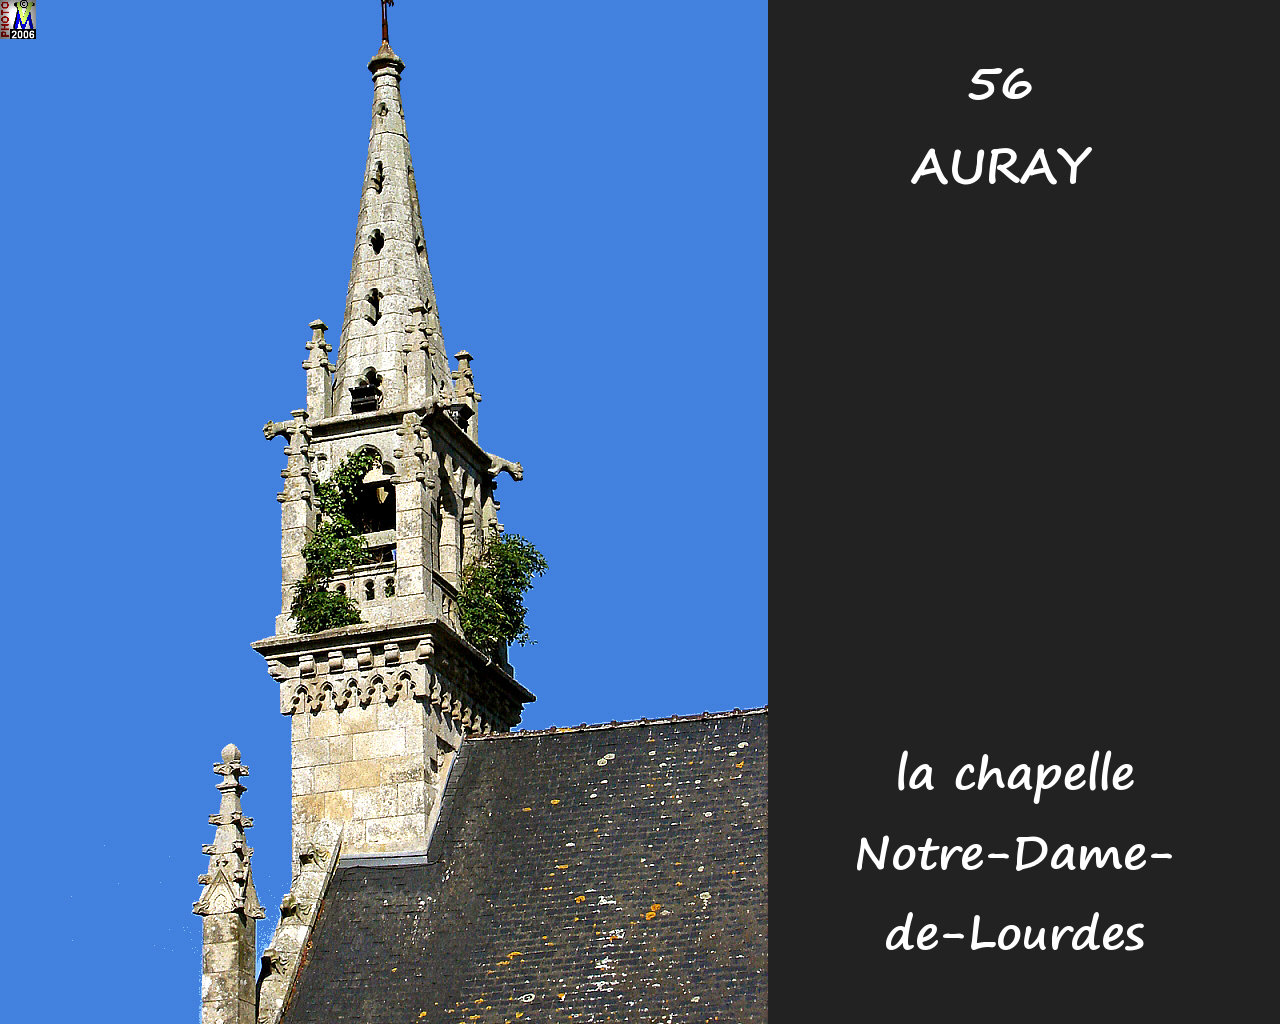 56AURAY_chapelle_ND_Lourdes_102.jpg